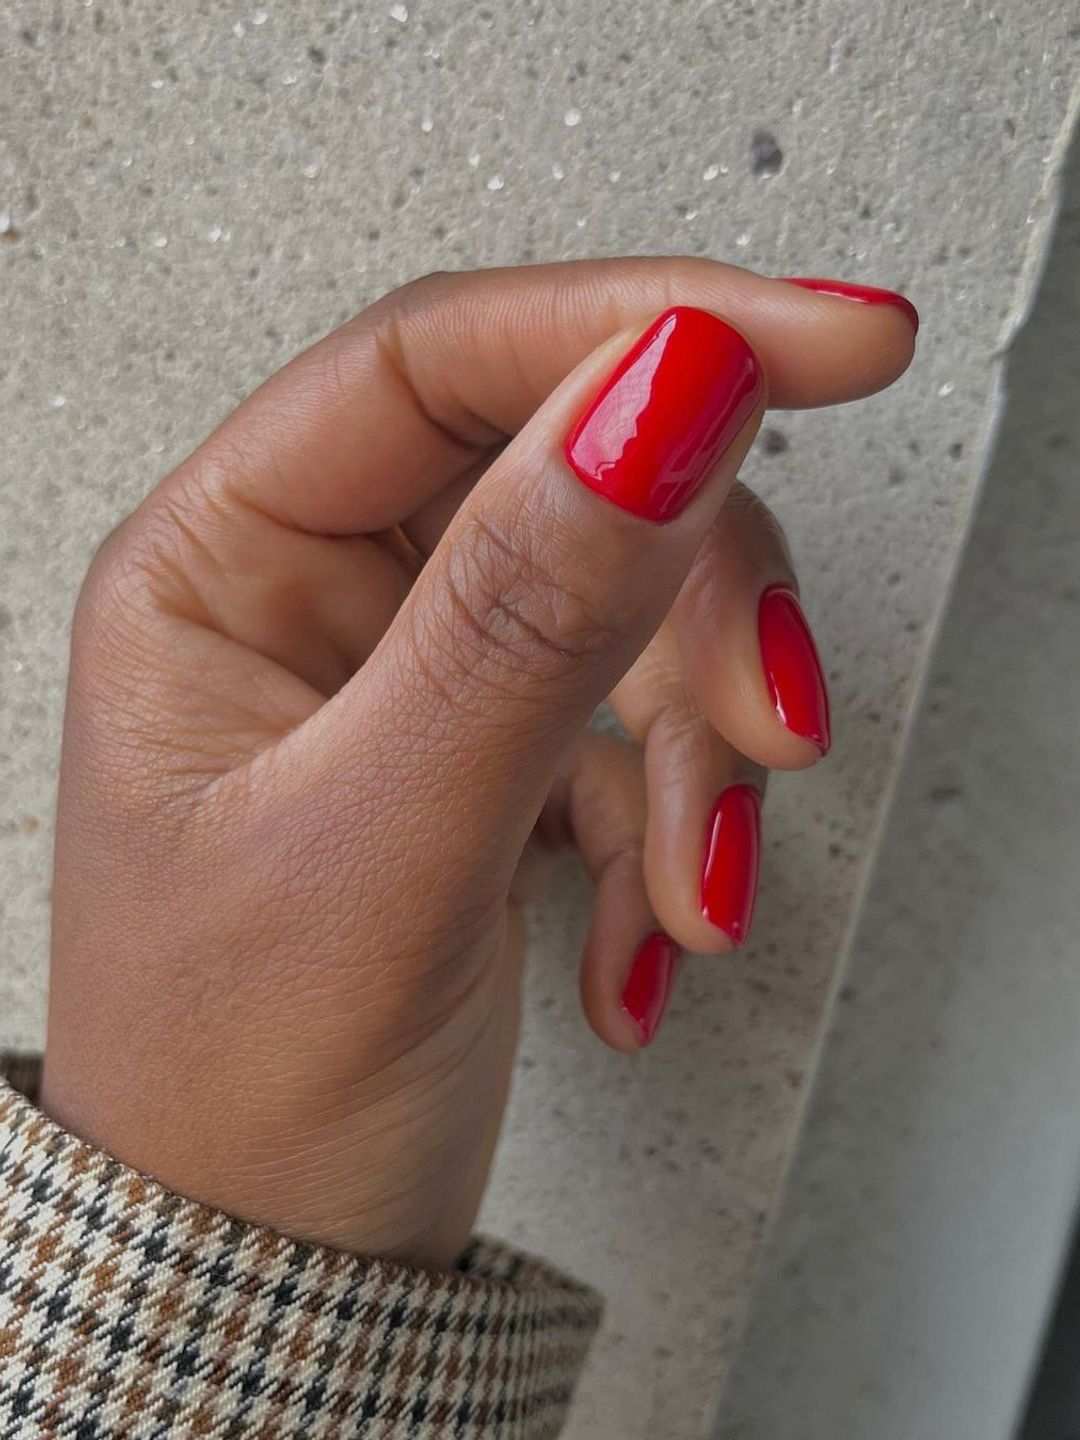 Scarlet nails